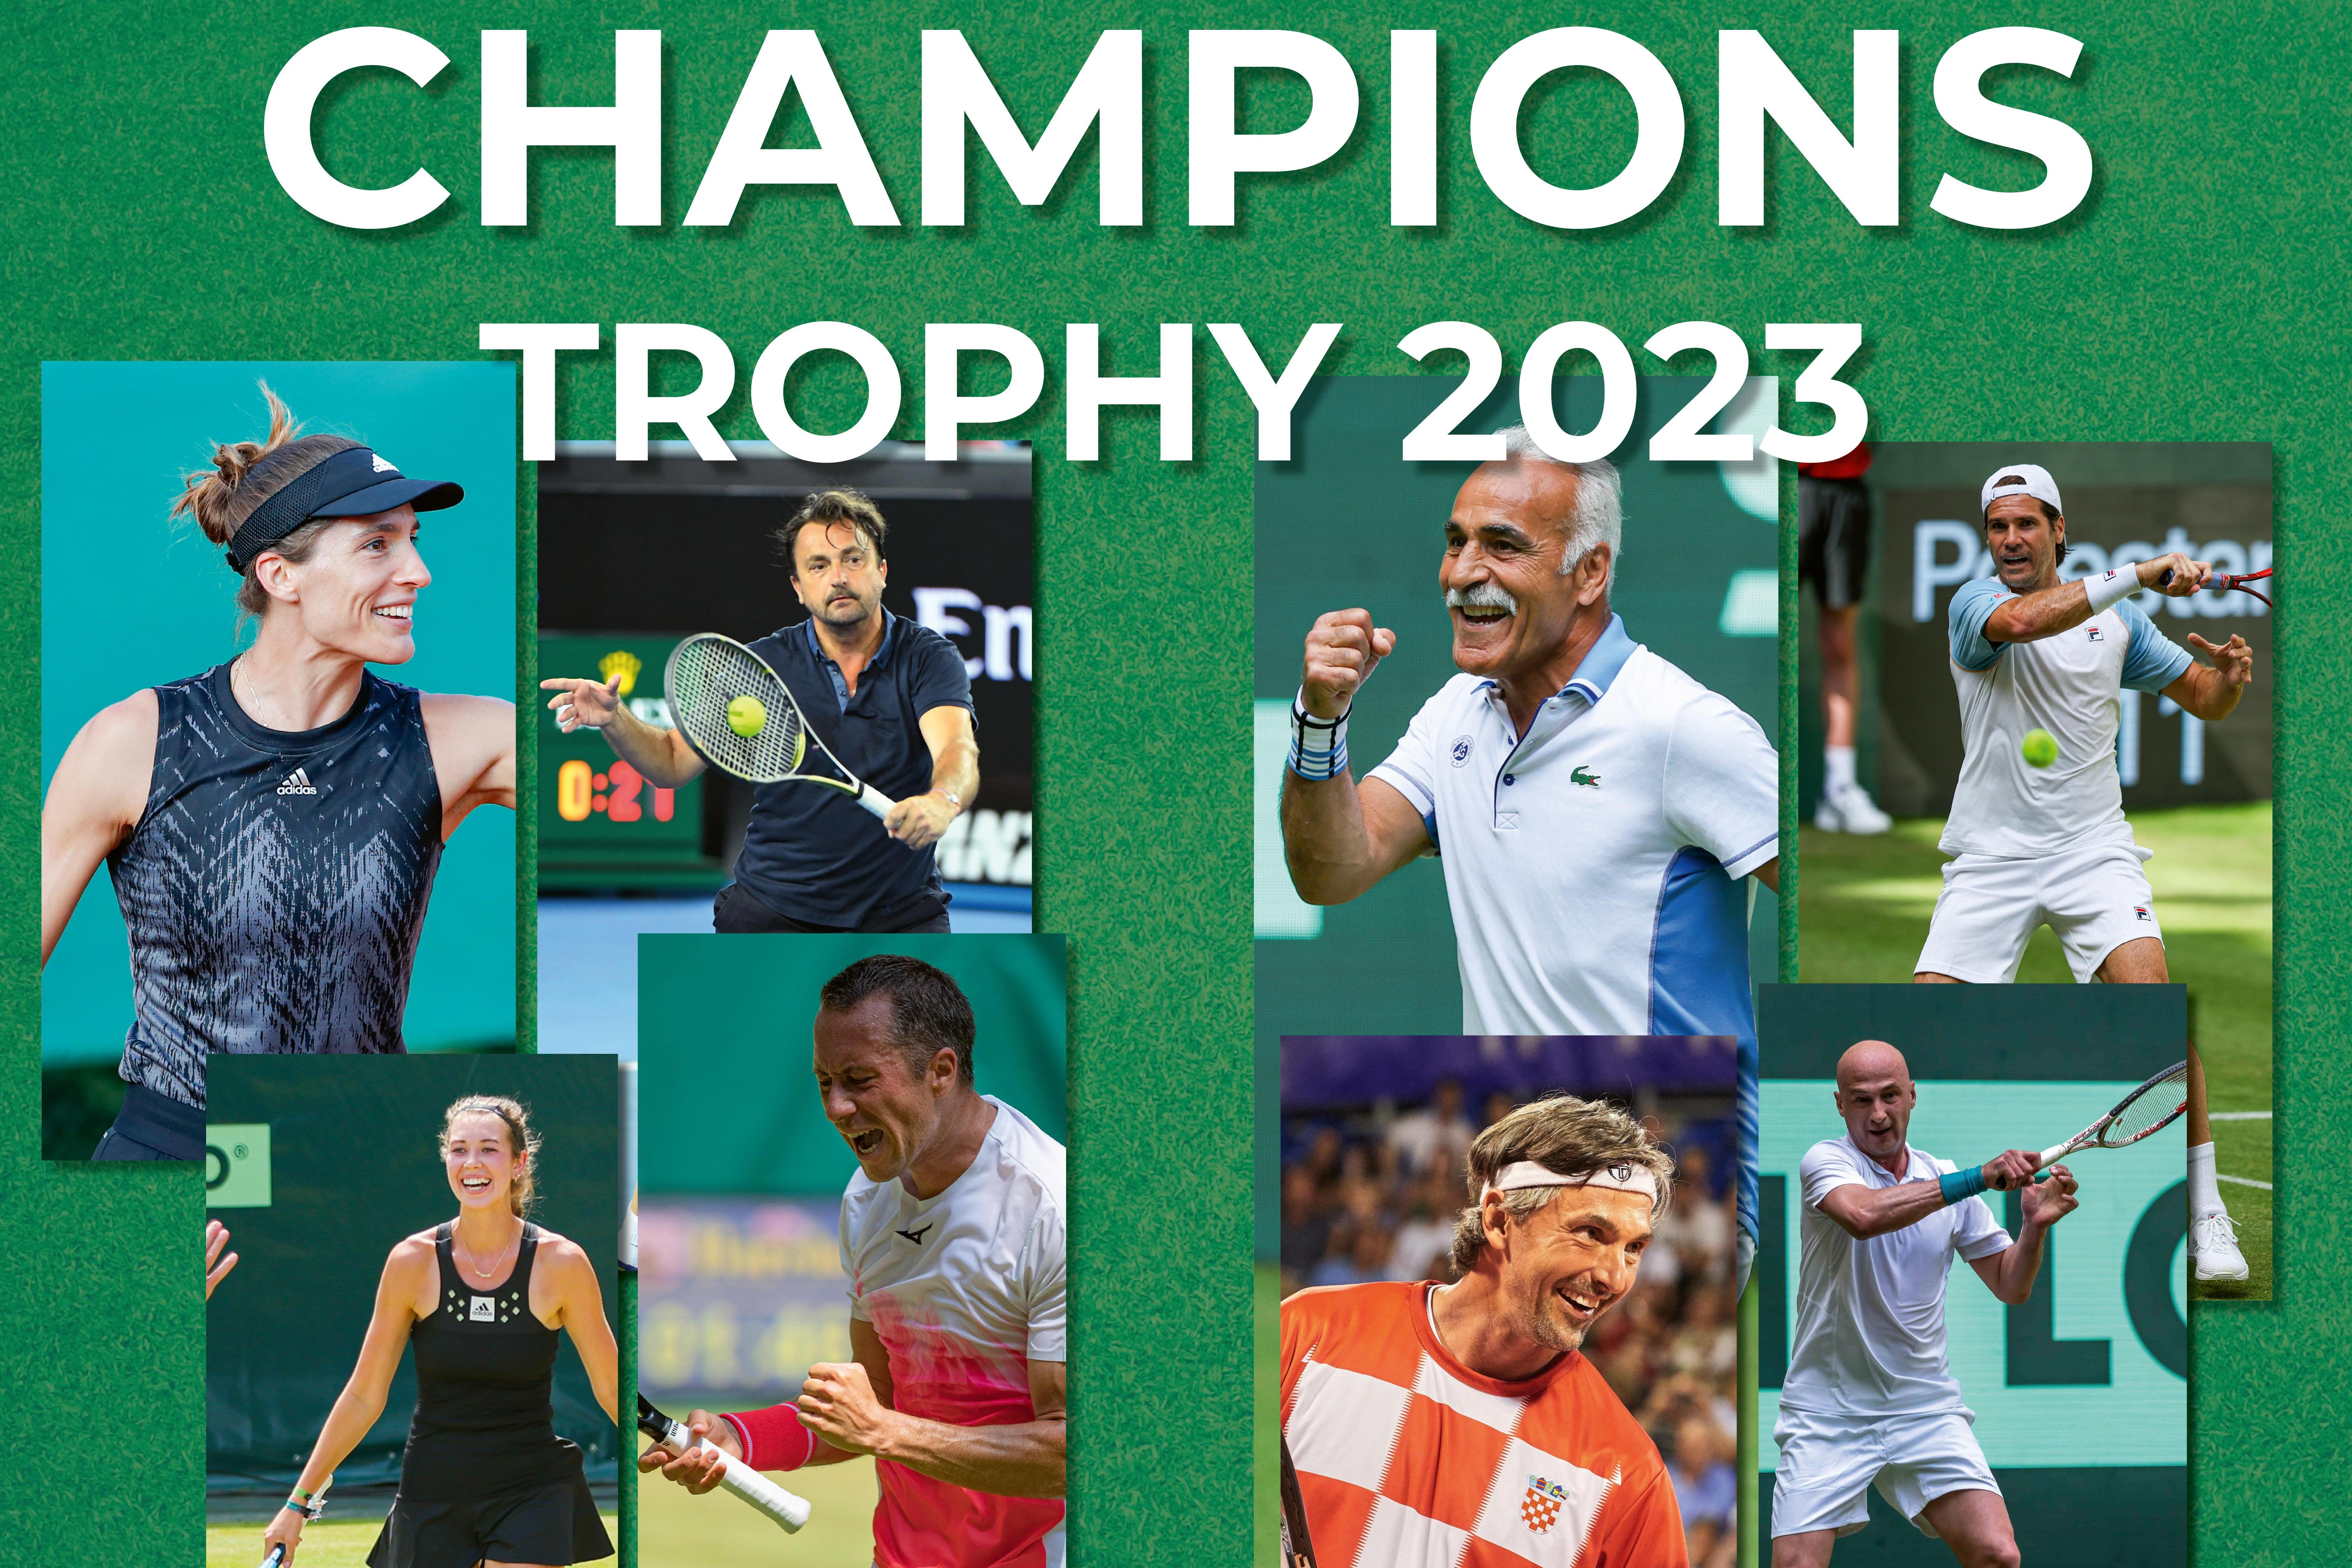 Champions Trophy 2023